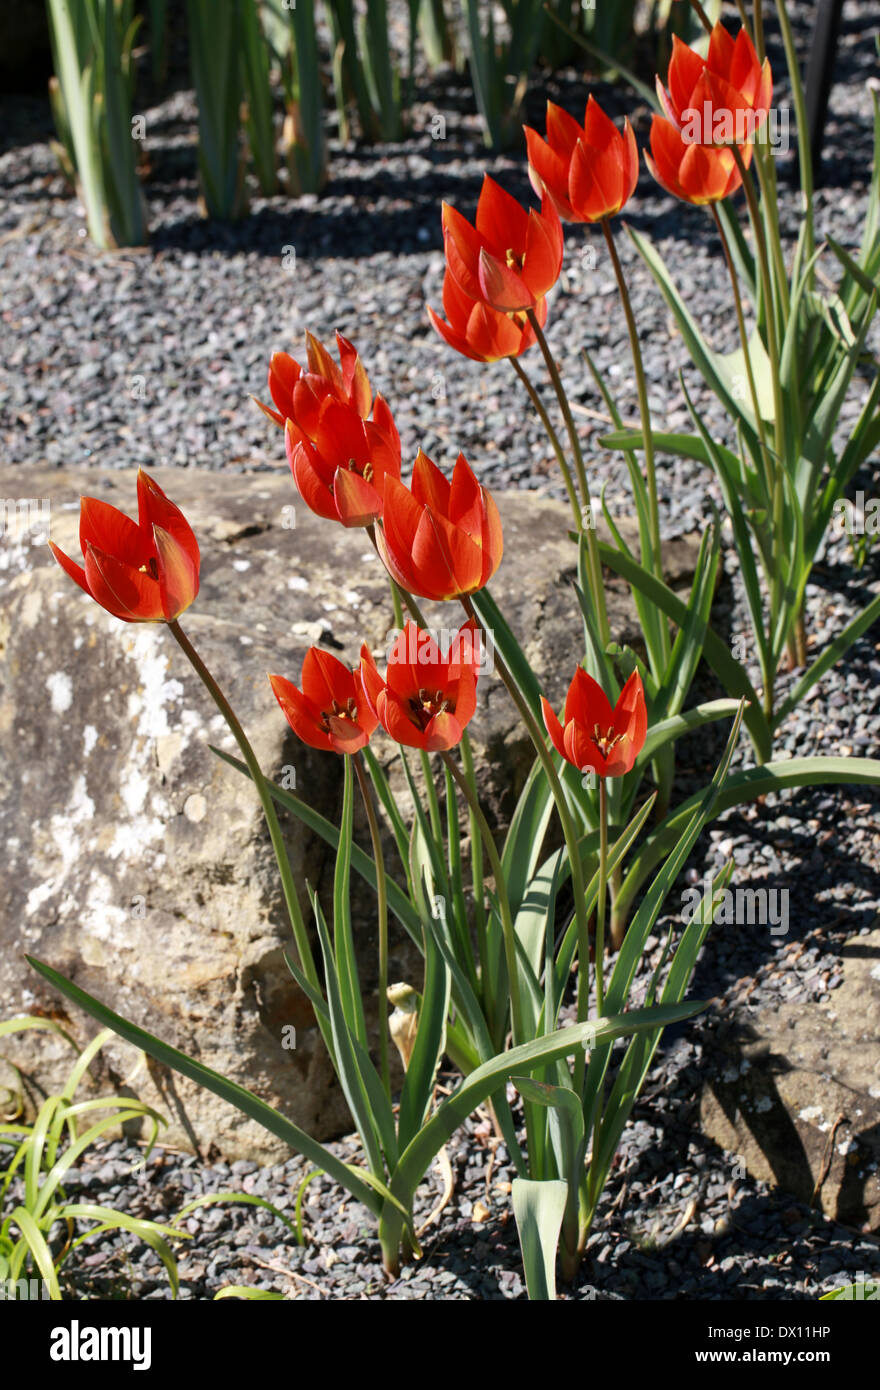 Species Tulip, Tulipa whittallii, Liliaceae. Turkey. Stock Photo